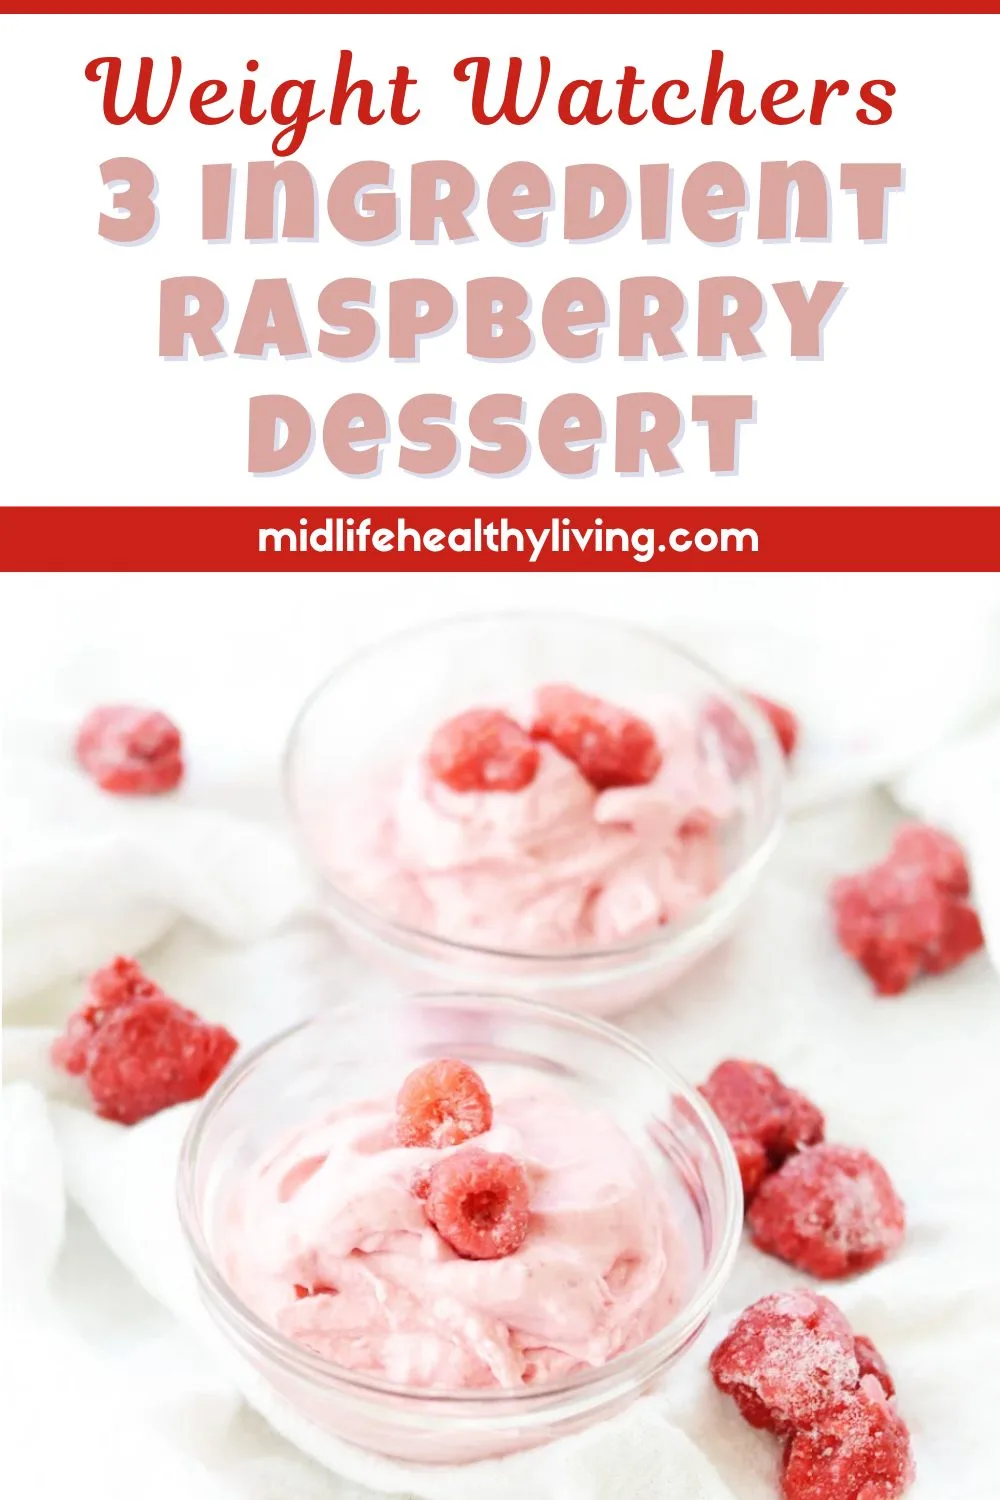 Pinterest image for 3 ingredient raspberry dessert for Weight Watchers